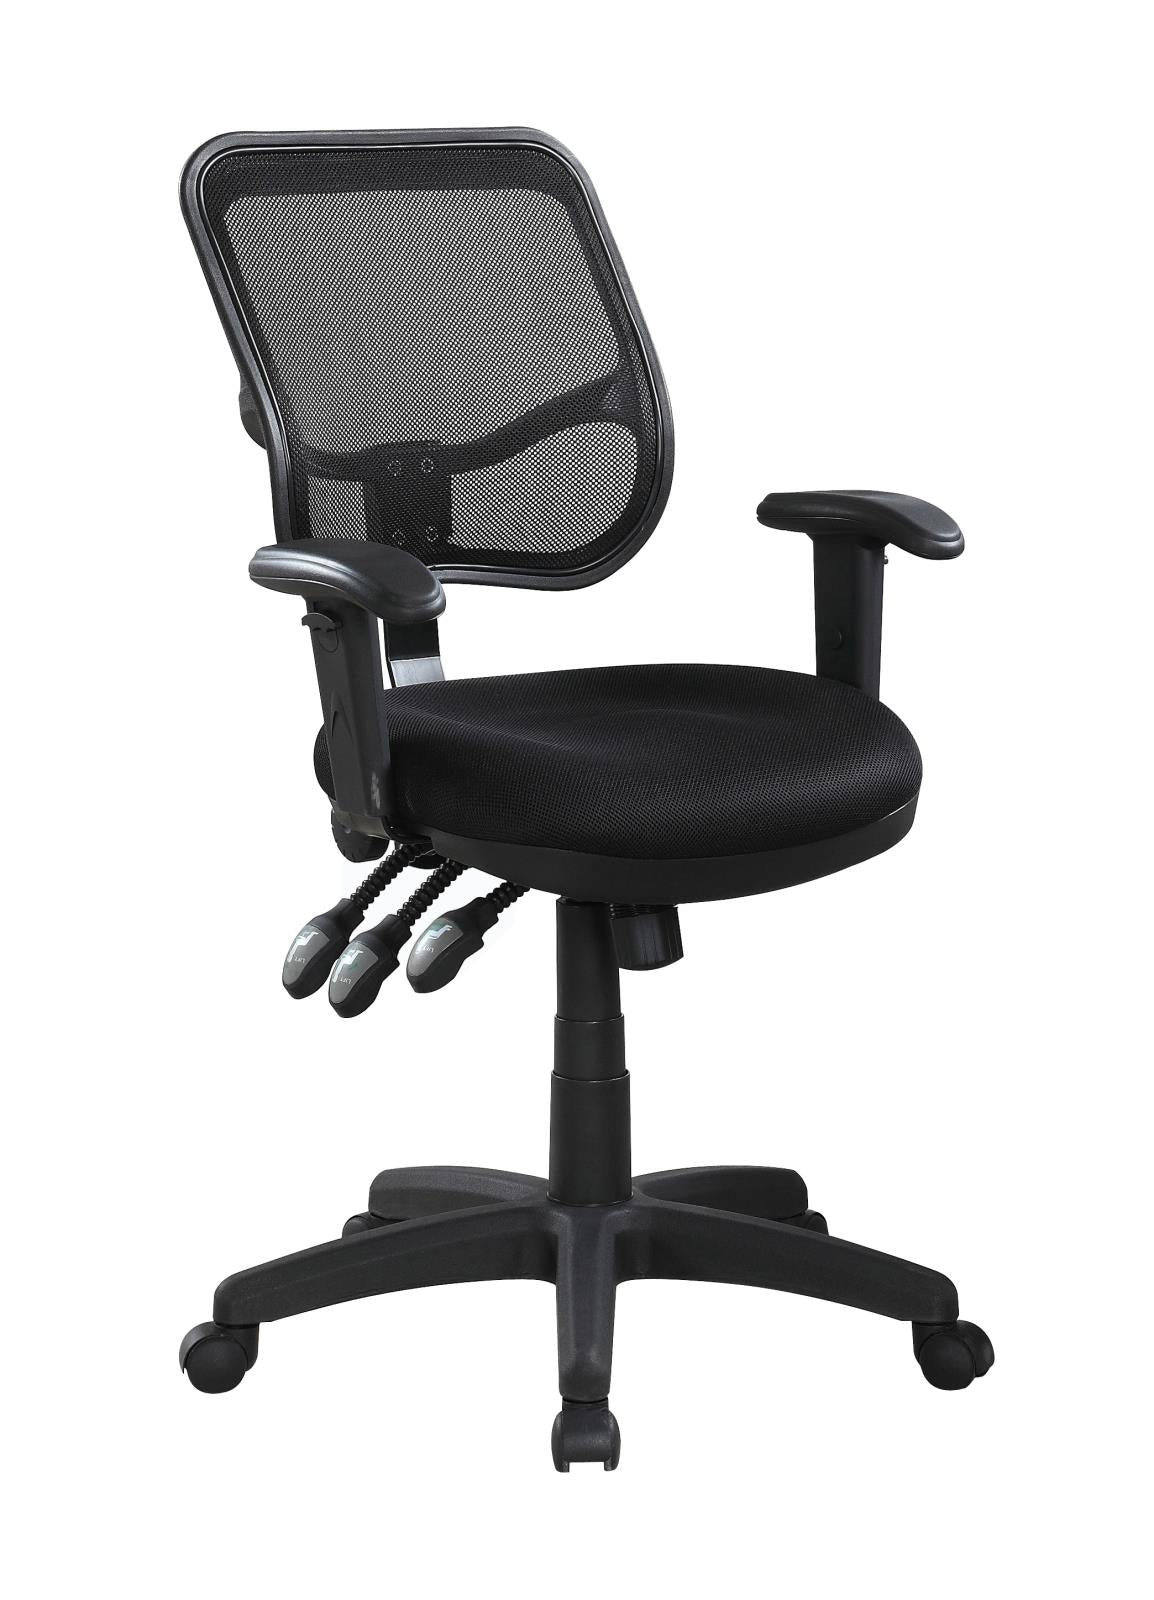 Rollo - Rollo Adjustable Height Office Chair Black